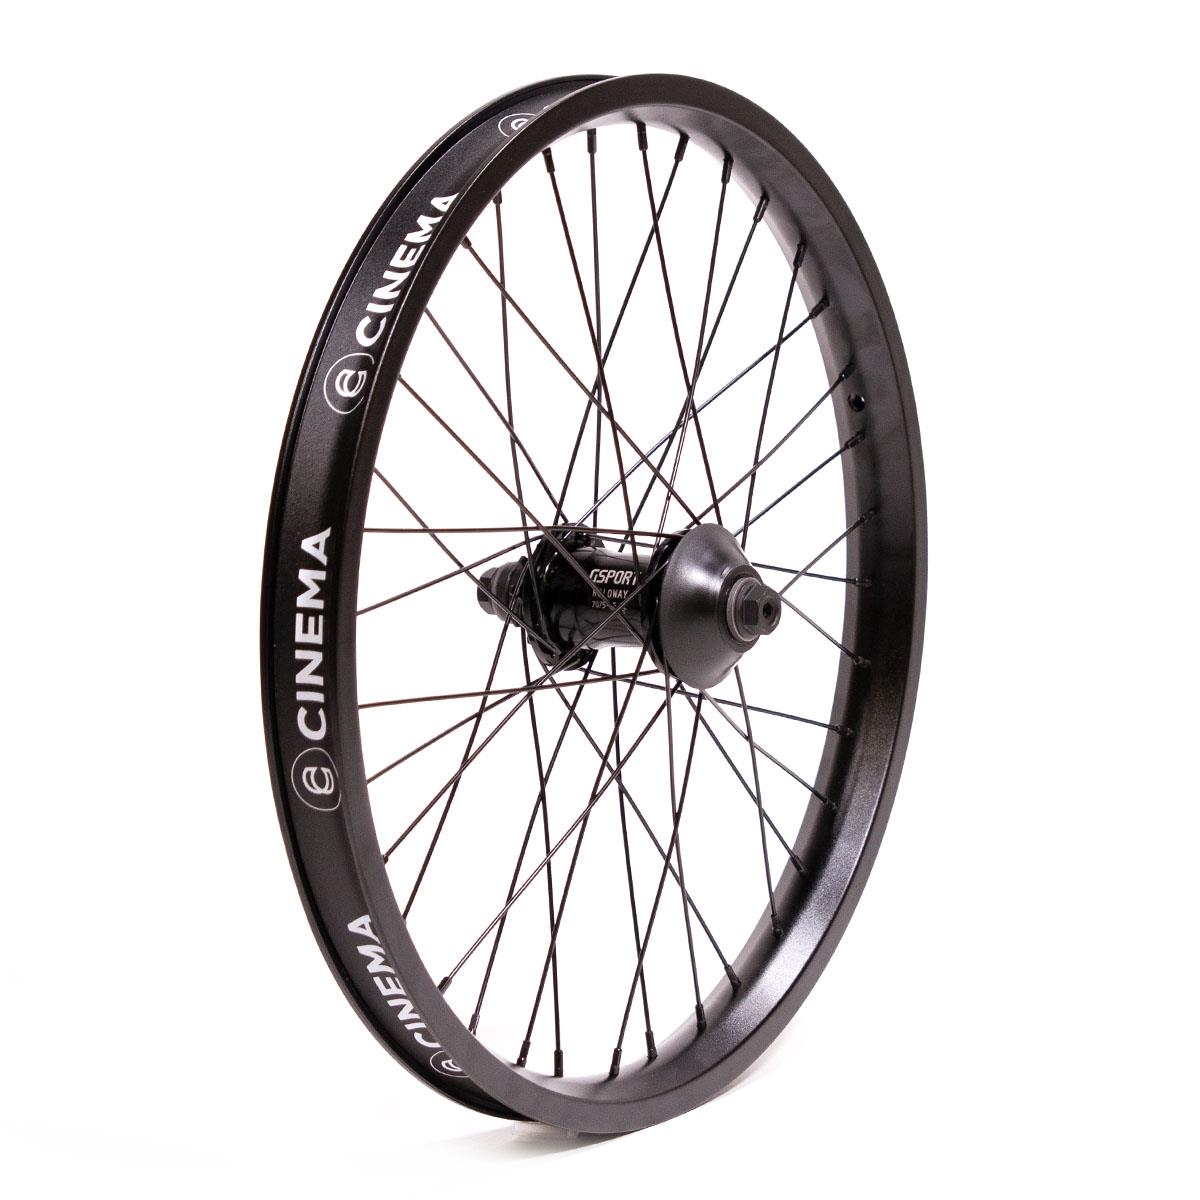 G-Sport Roloway / Cinema 888 Custom Rear Wheel - Black